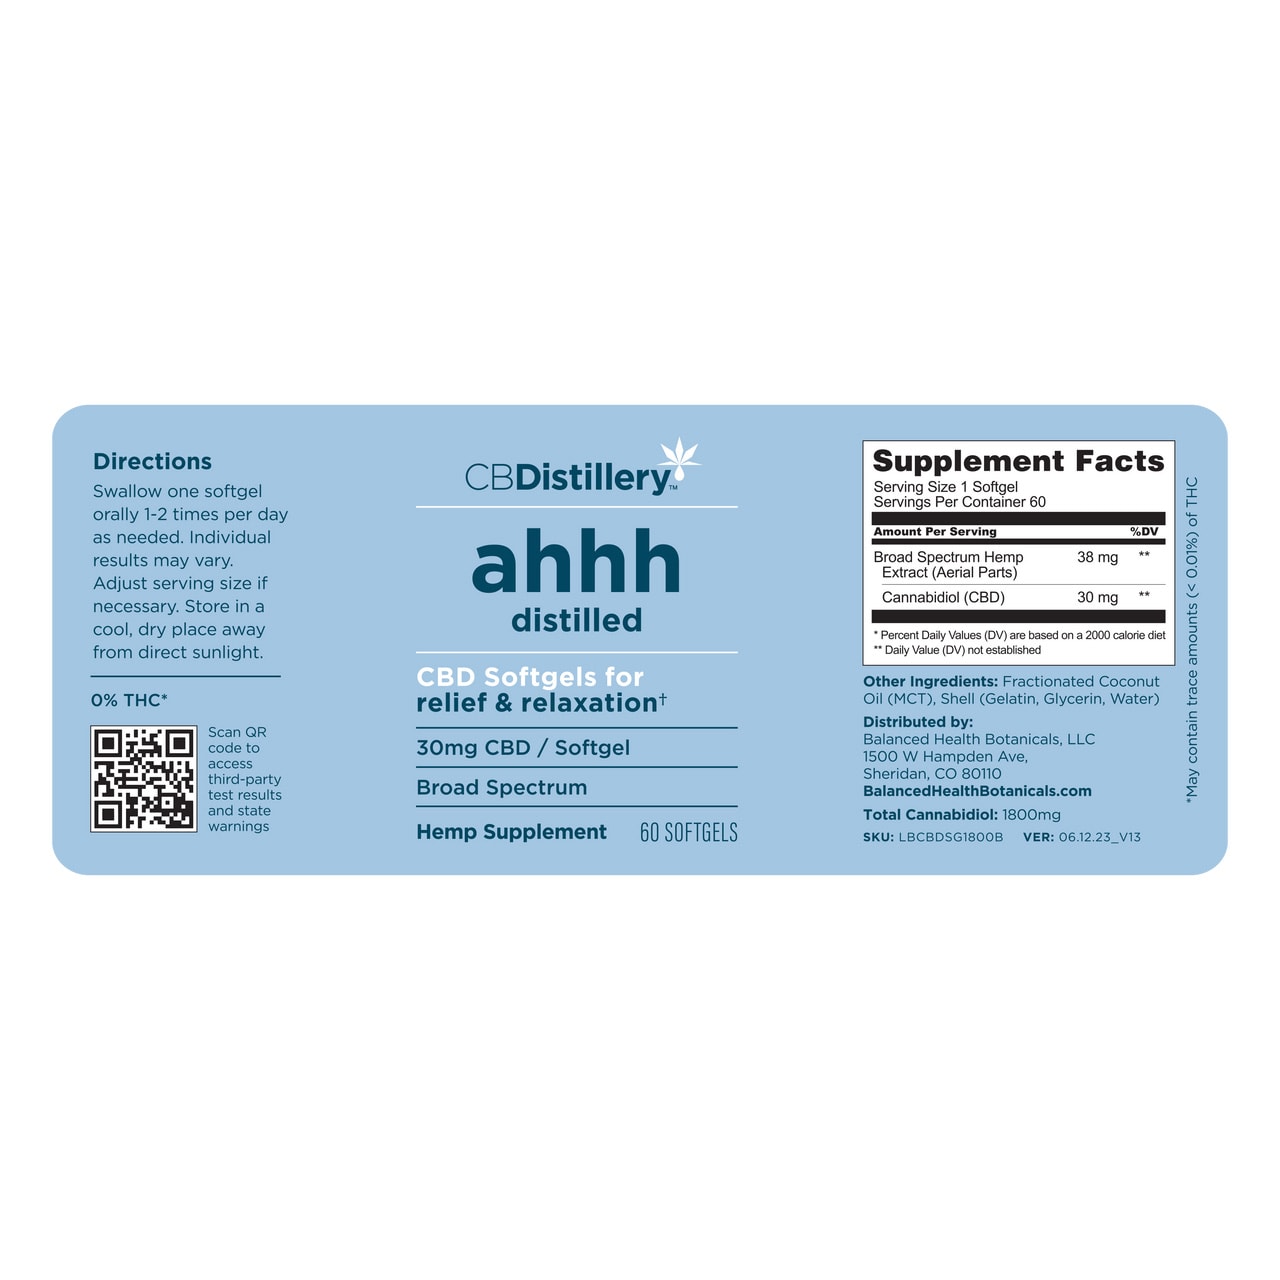 CBDistillery, Ahhh Distilled Broad Spectrum THC-Free CBD Softgels For Relief & Relaxation, 60ct, 1800mg CBD2